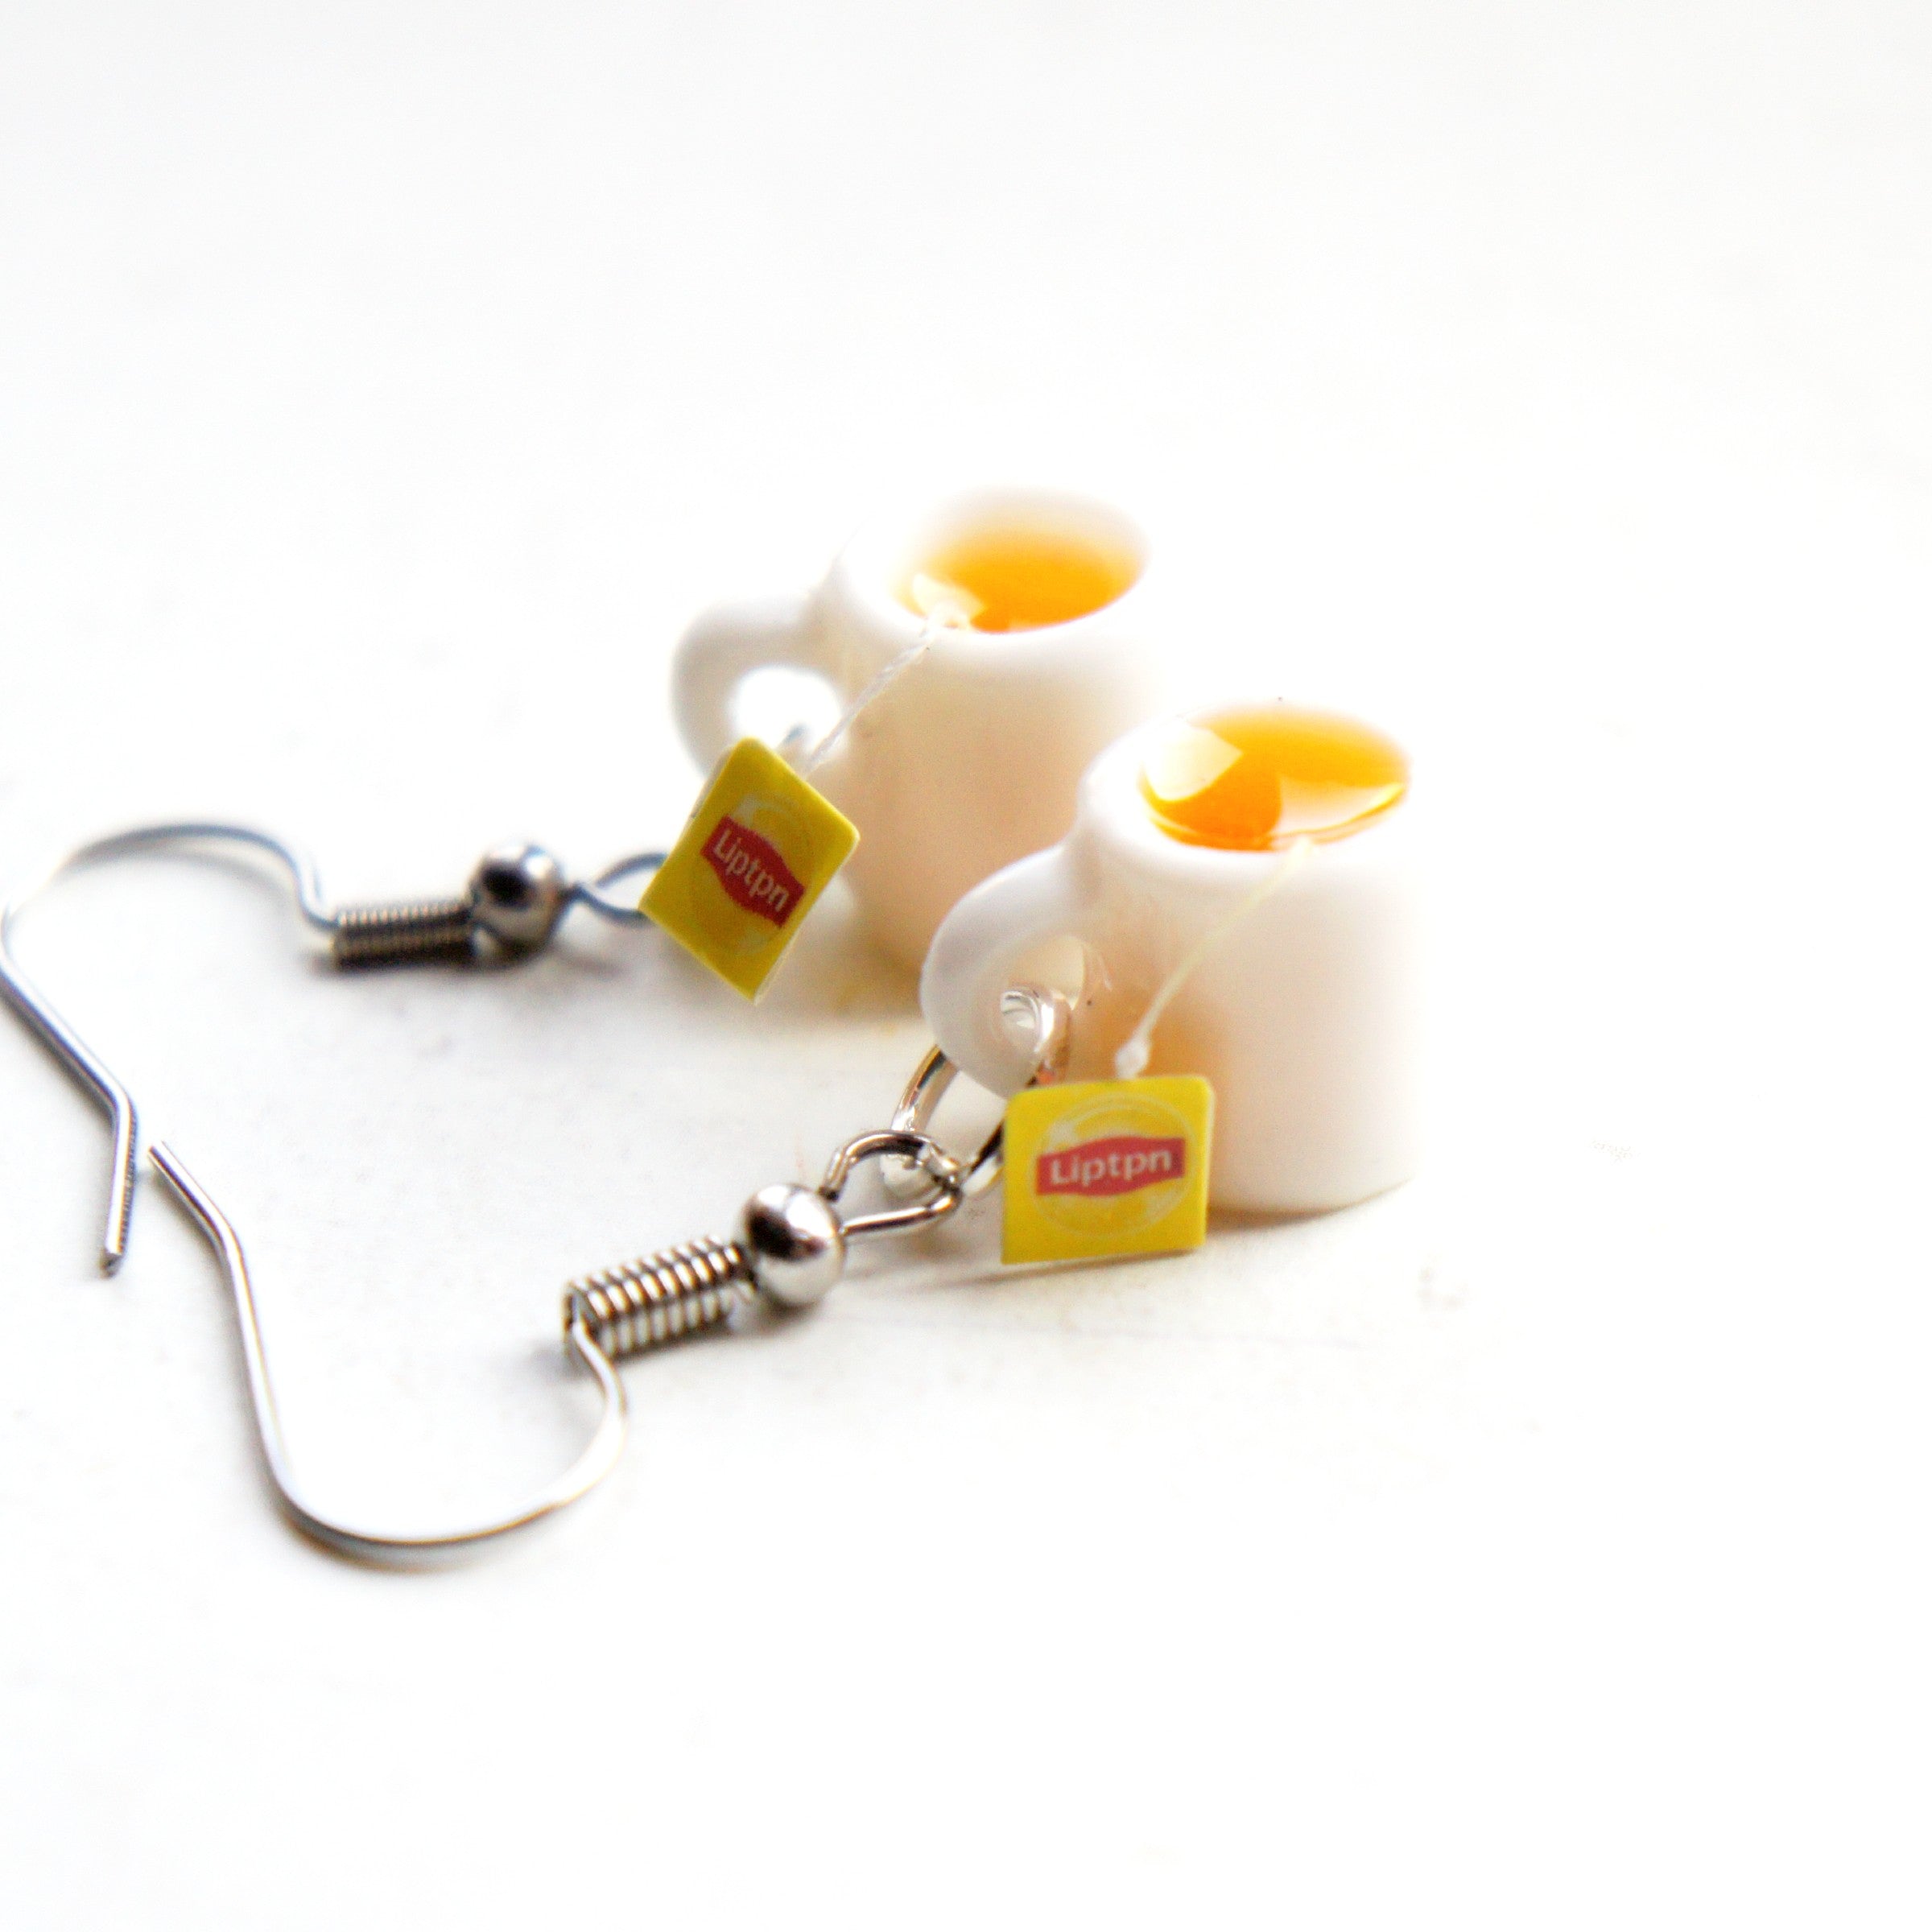 Lipton Tea Earrings - Jillicious charms and accessories